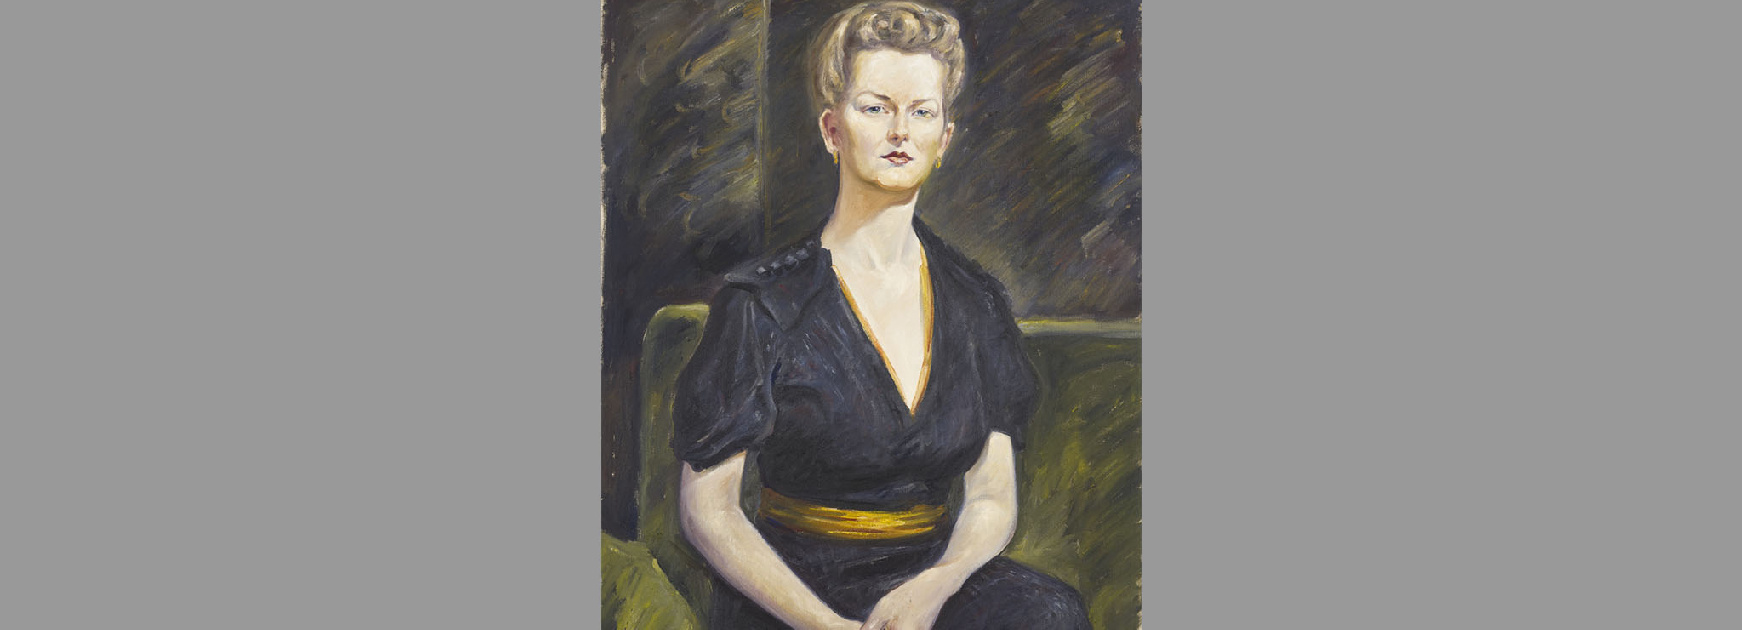 Portrait of Clyfford Still's wife Patricia